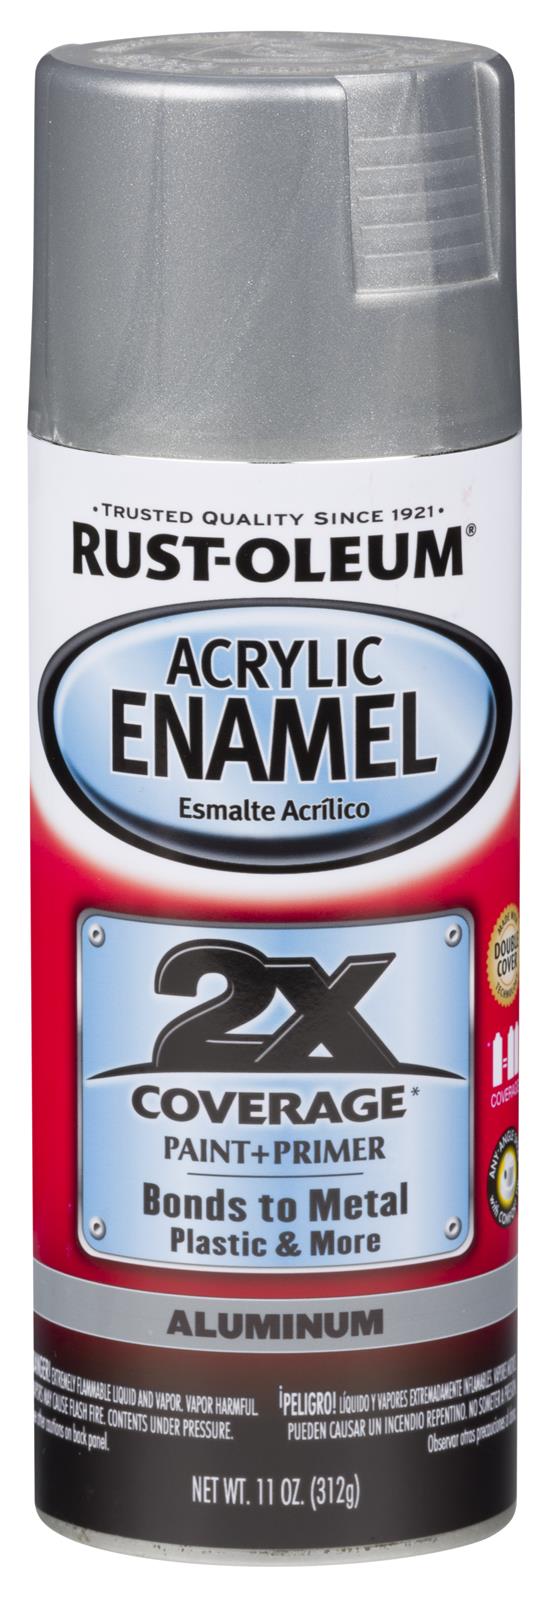 Acrylic Enamel 2X